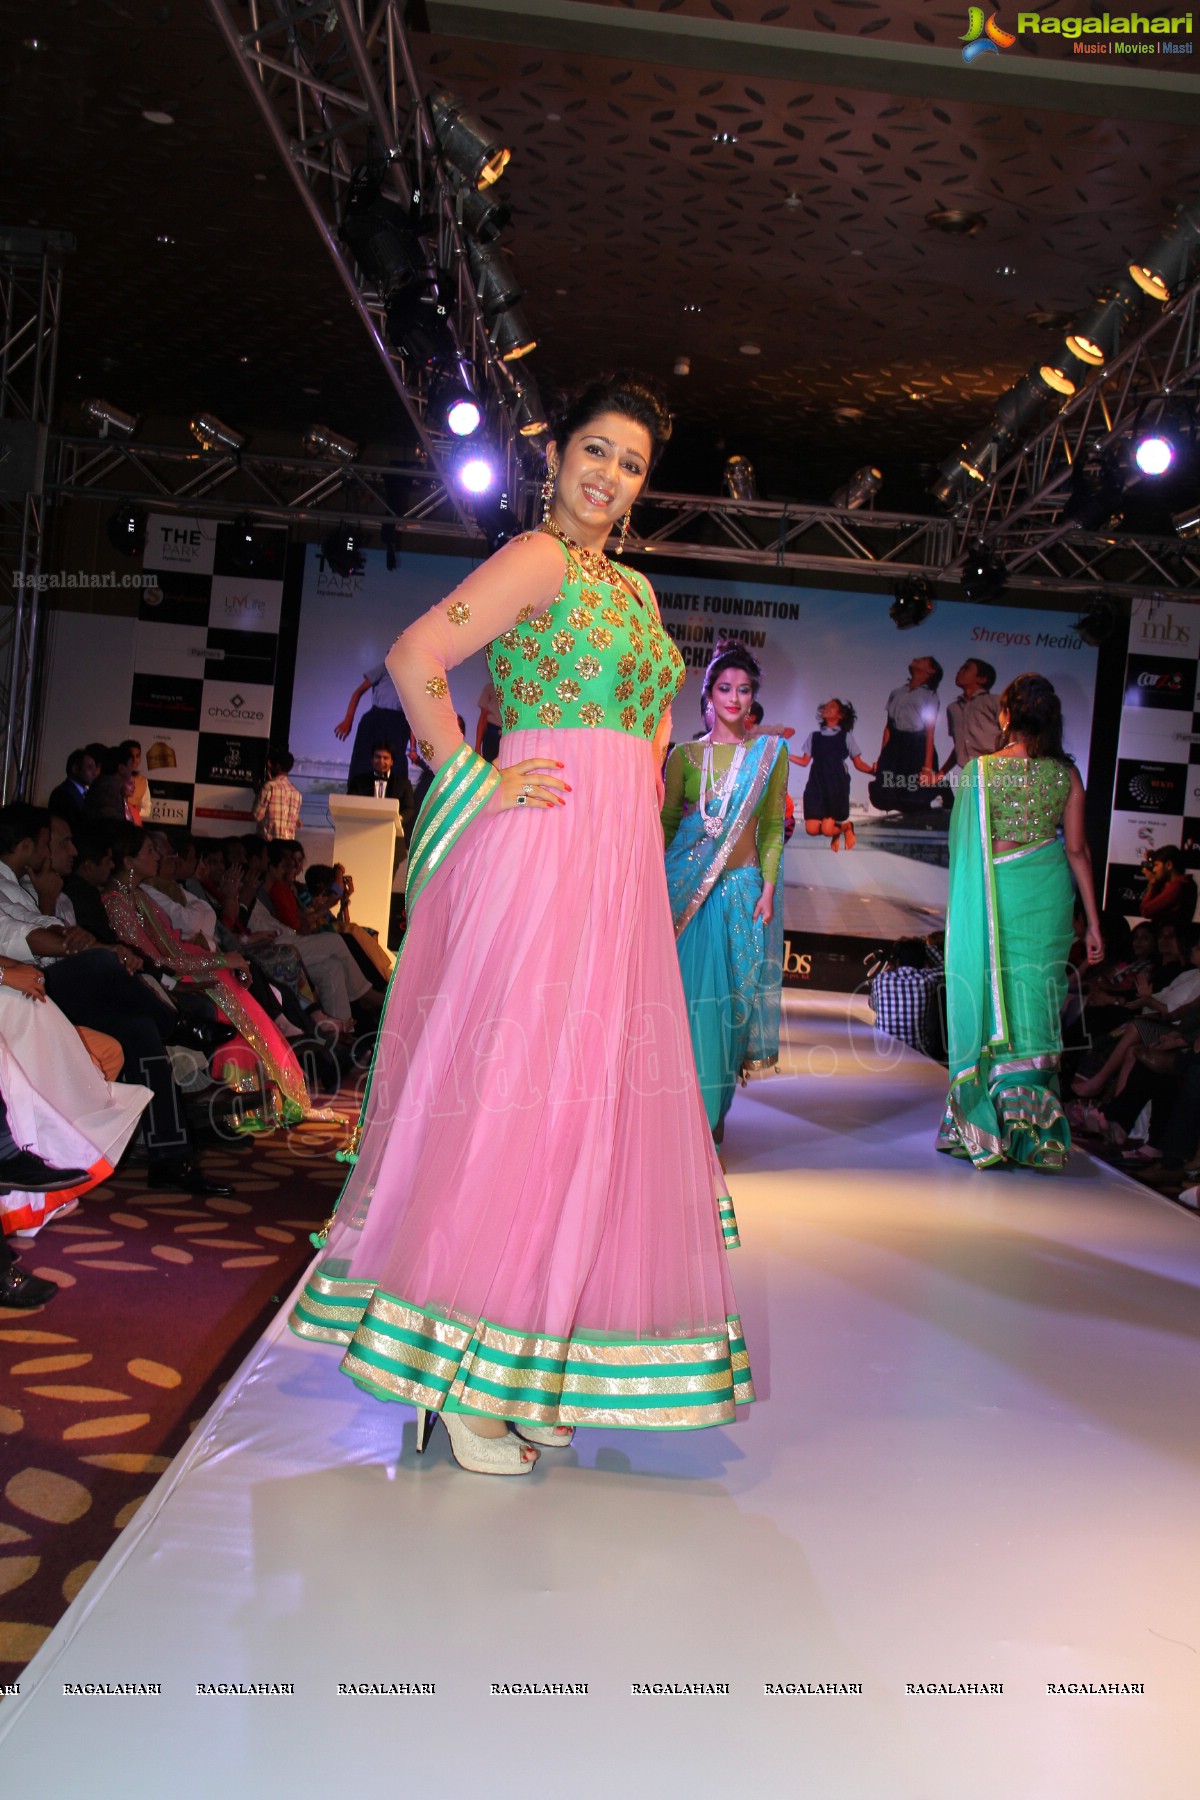 Charmi walks the ramp at Passionate Foundation Fashion Show - Exclusive Photos